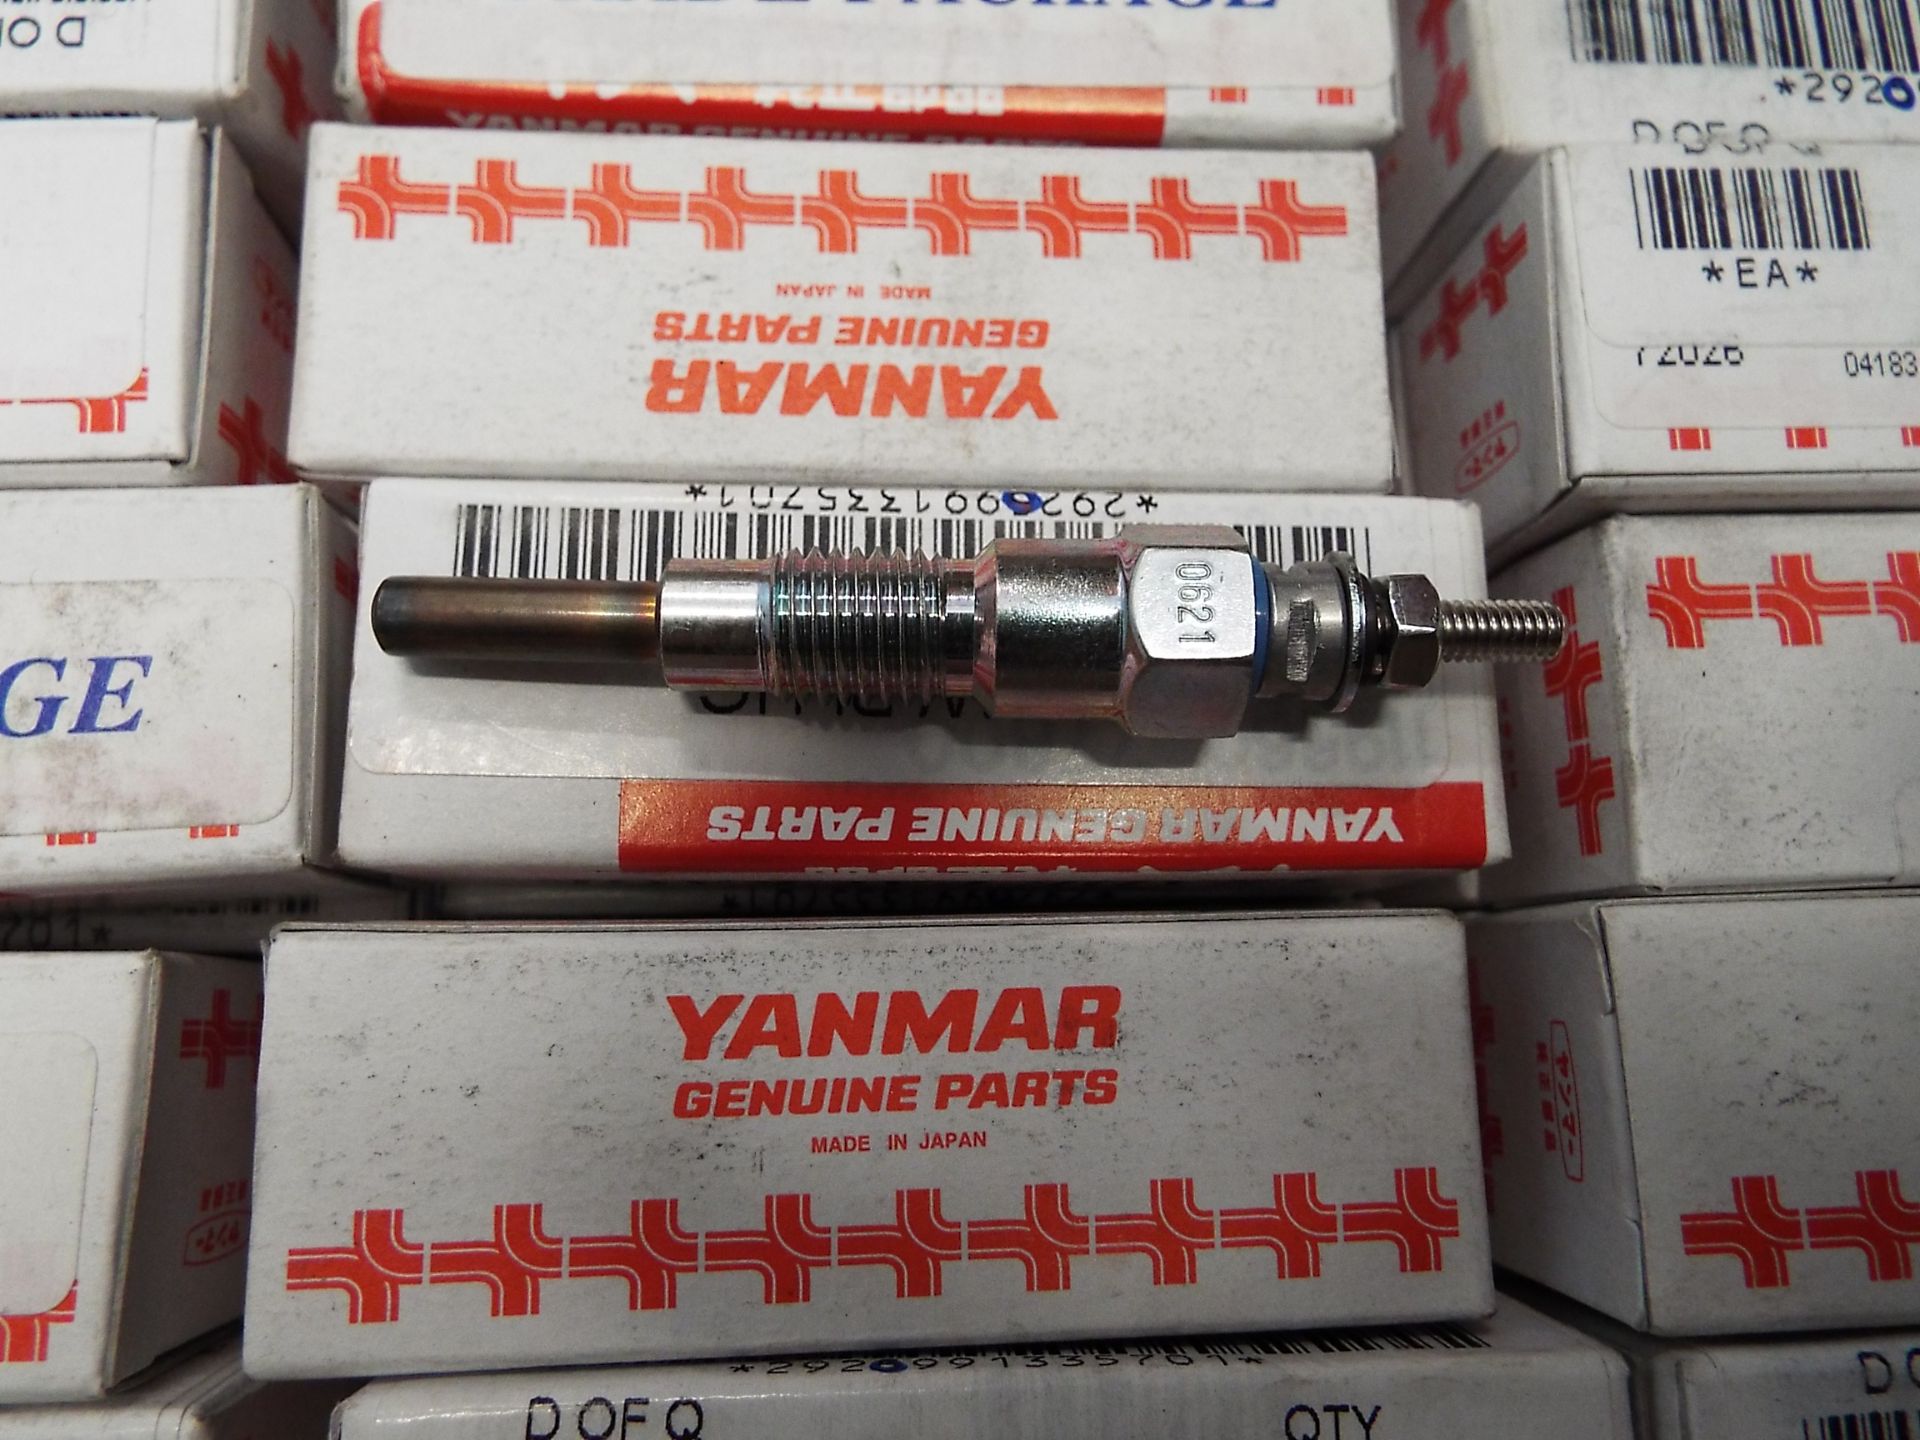 Approx 250 x Yanmar Glow Plugs P/No 119660-77800 - Image 2 of 6